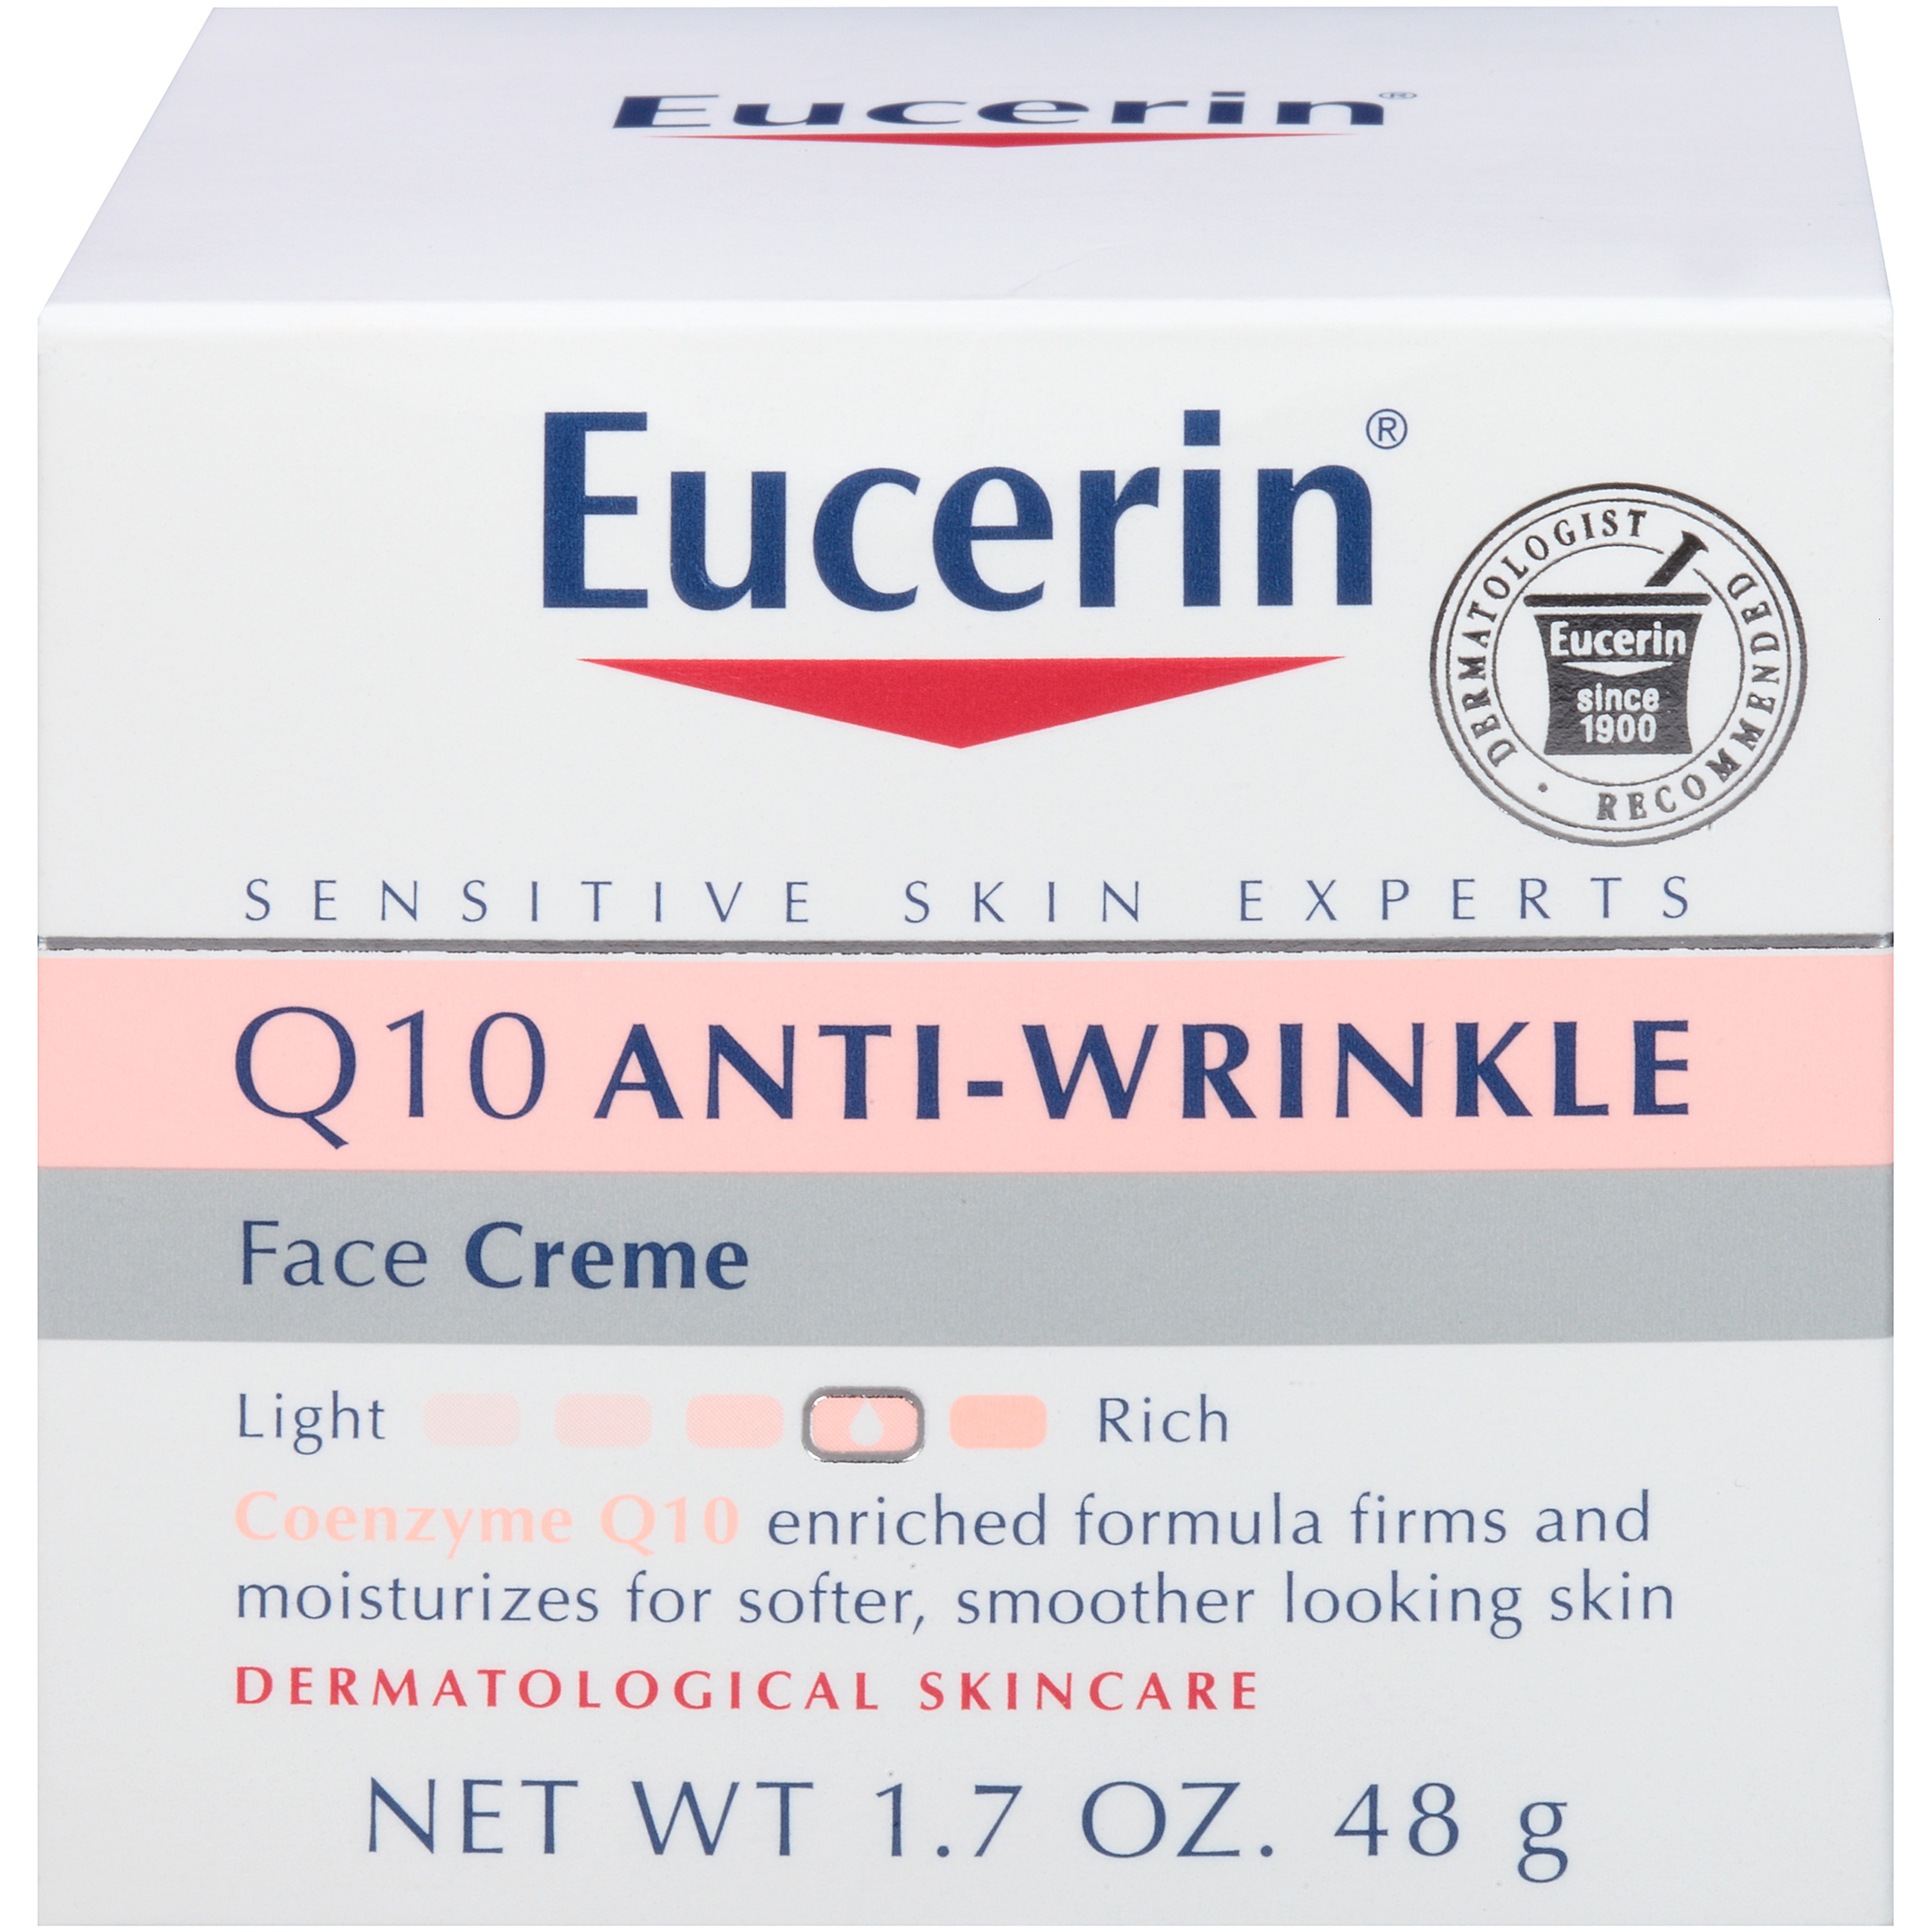 Eucerin Q10 Anti-Wrinkle Face Cream for Sensitive Skin, 1.7 Oz Jar - image 3 of 15